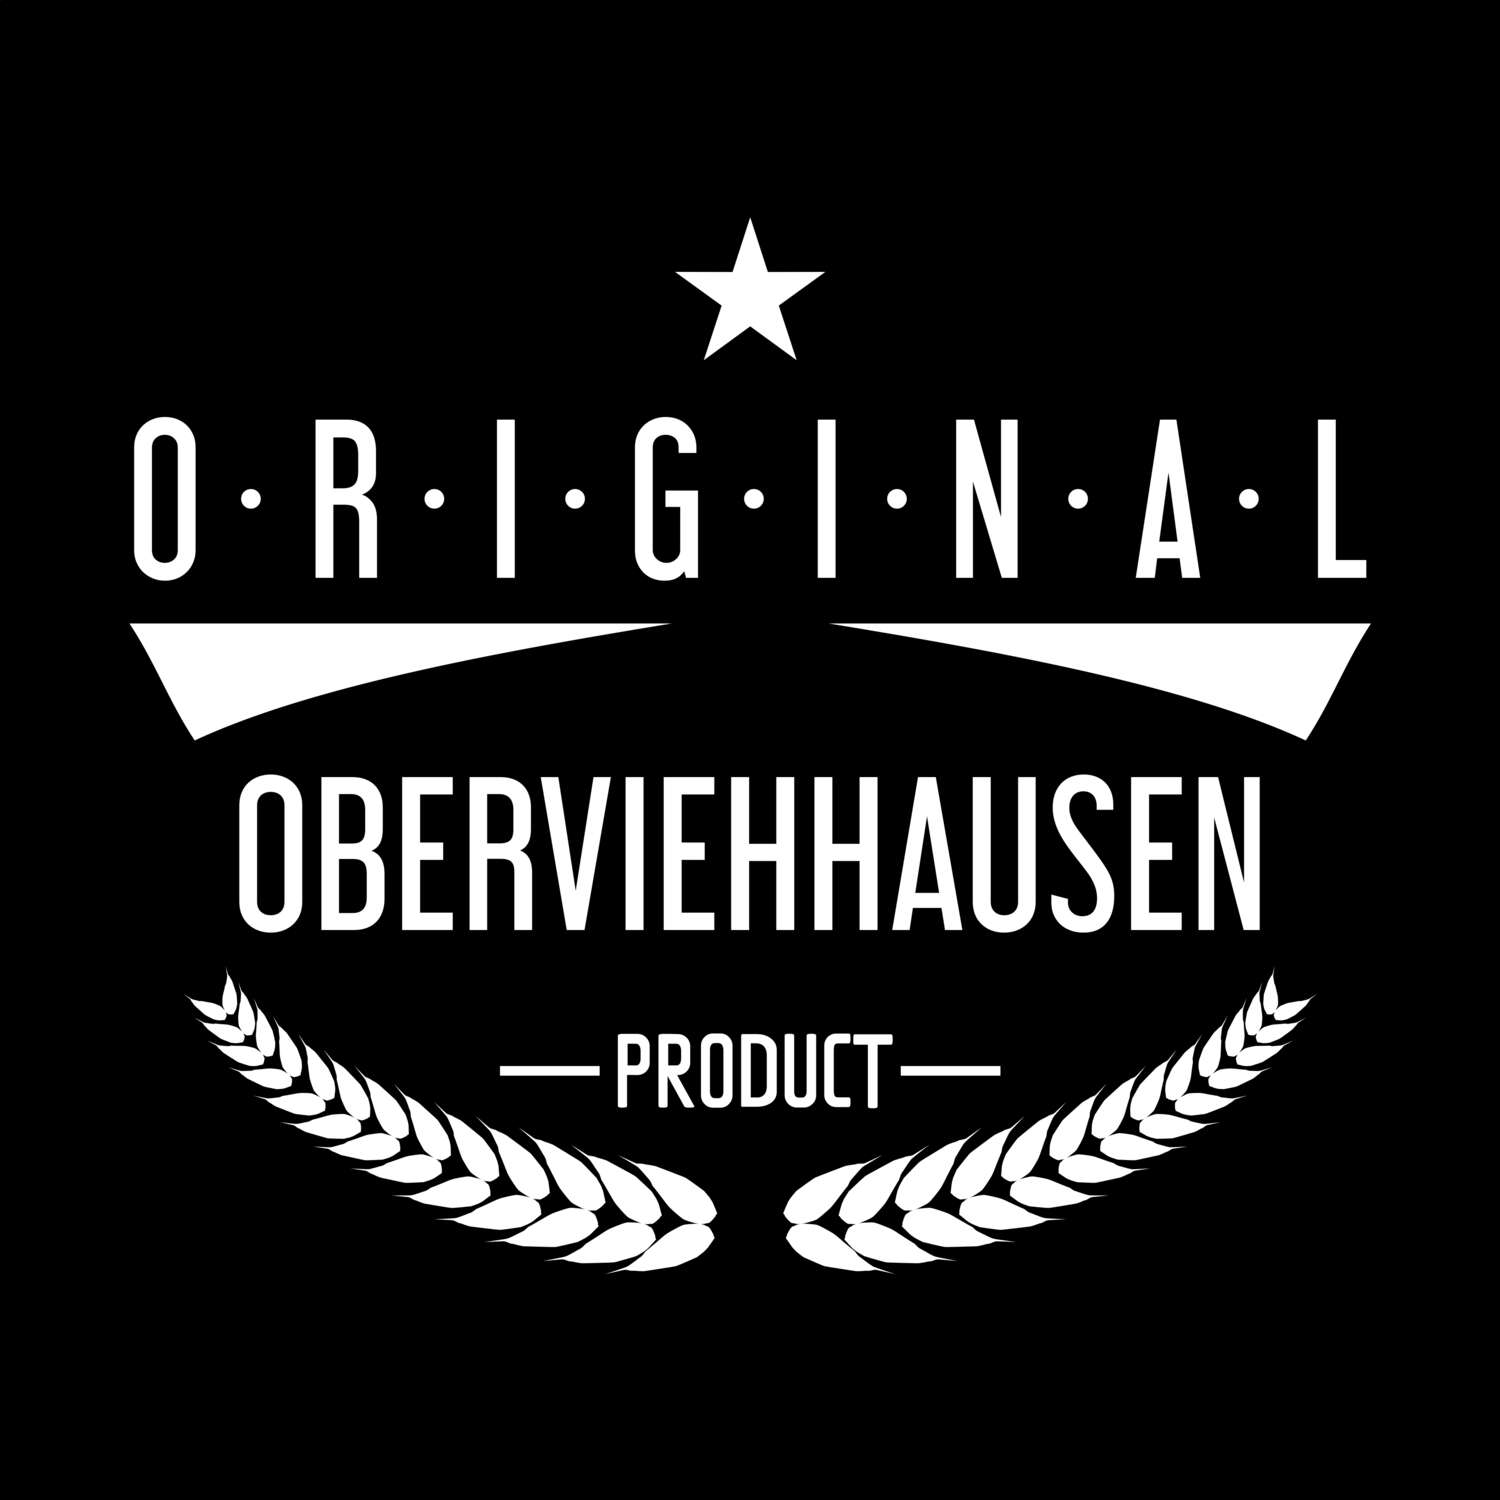 Oberviehhausen T-Shirt »Original Product«